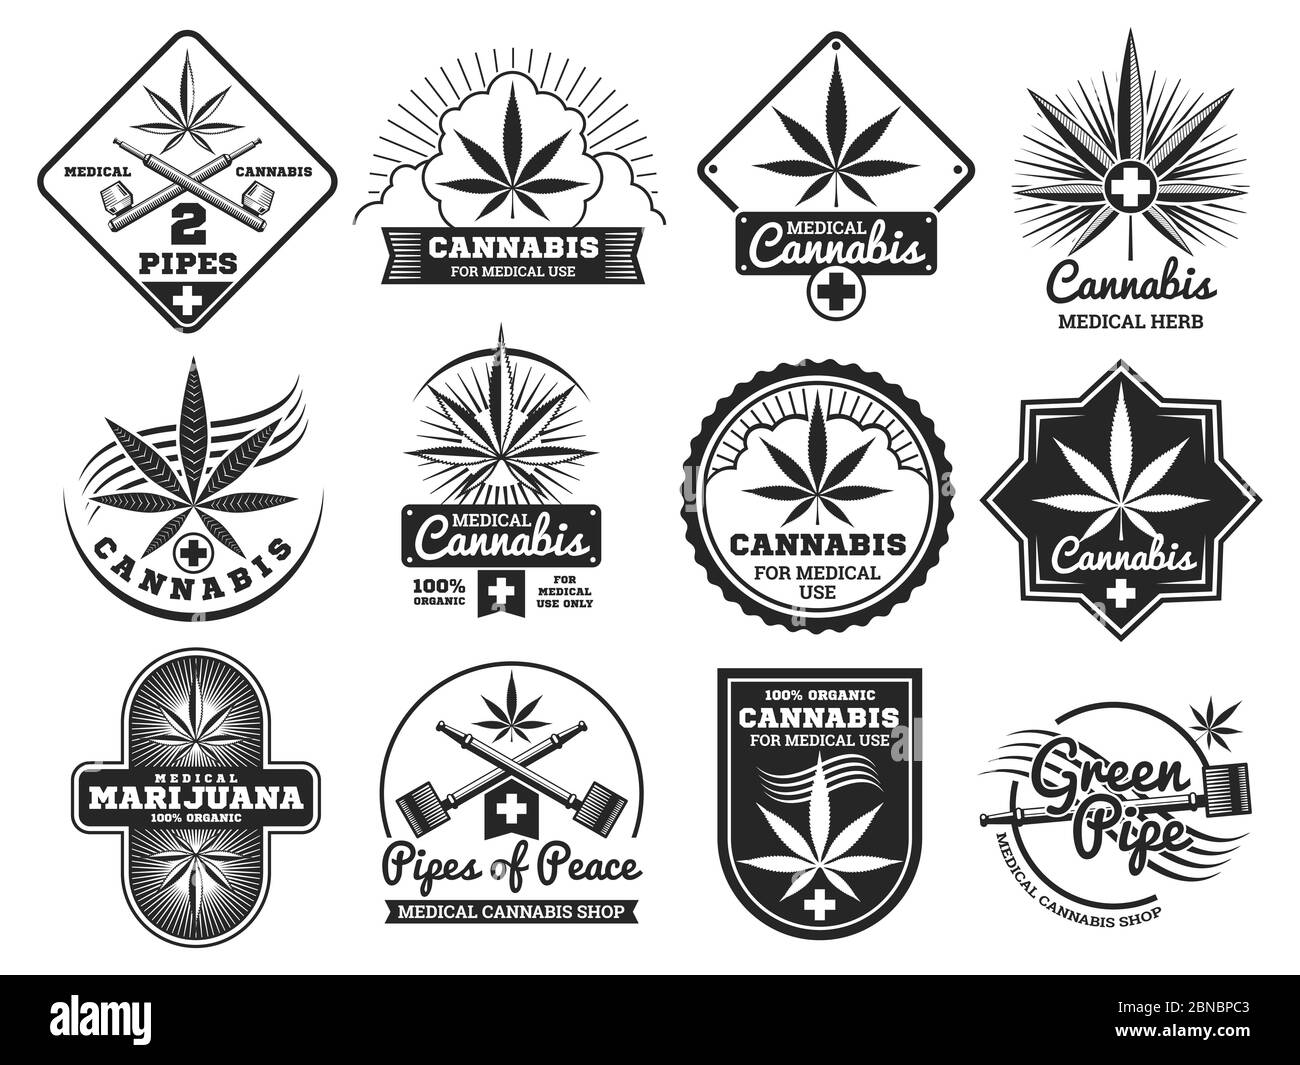 Hashish, rastaman, hemp, cannabis, marijuana vector logos and labels set isolated on white illustration Stock Vector